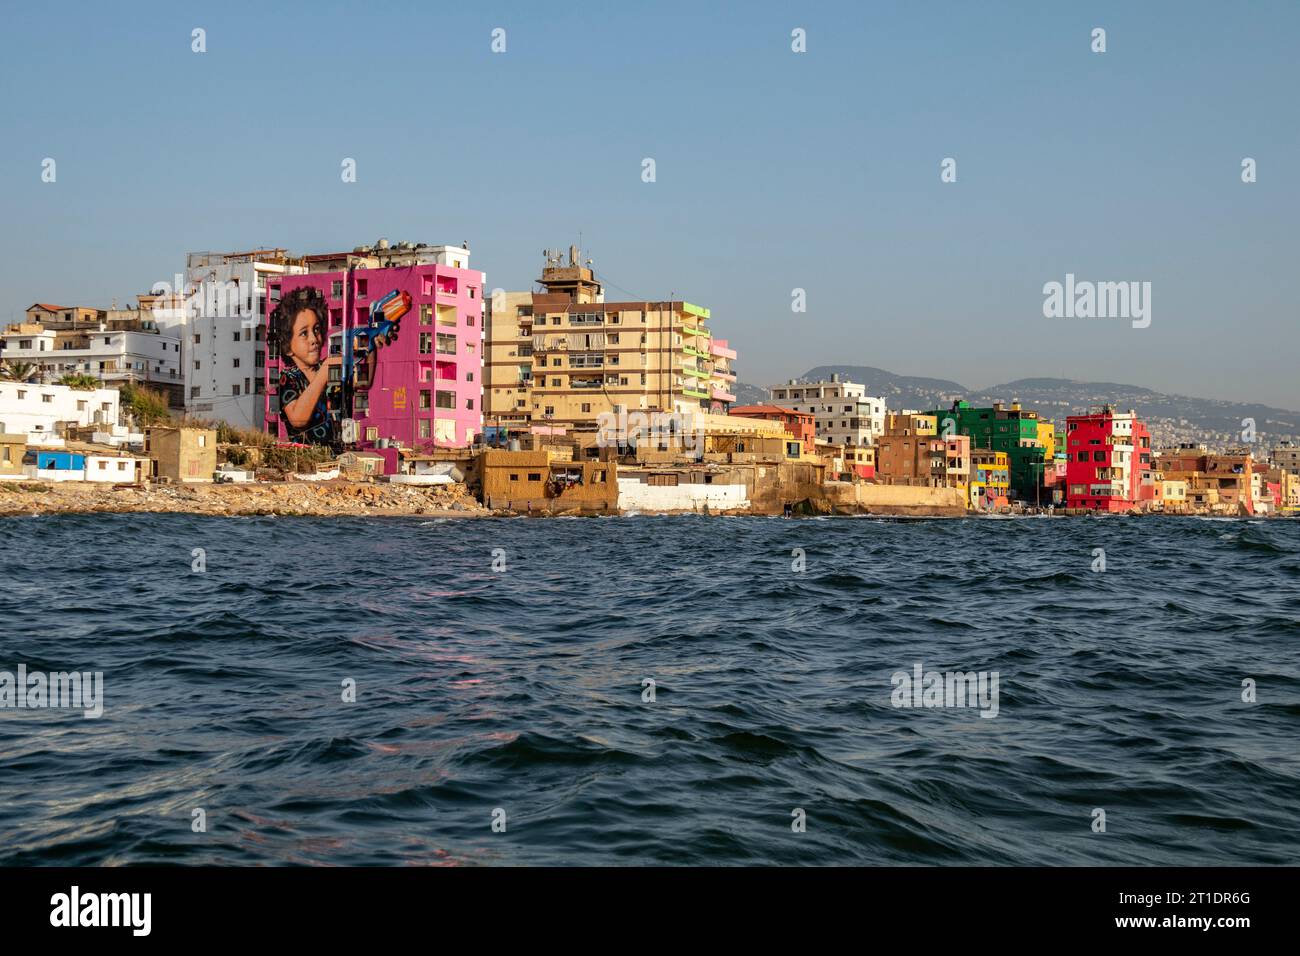 Beirut, Lebanon - 7 24 2018: The colorful buildings of the Ouzai Ouzville slums neighborhood south of Beirut, Lebanon. The buildings are prominently v Stock Photo